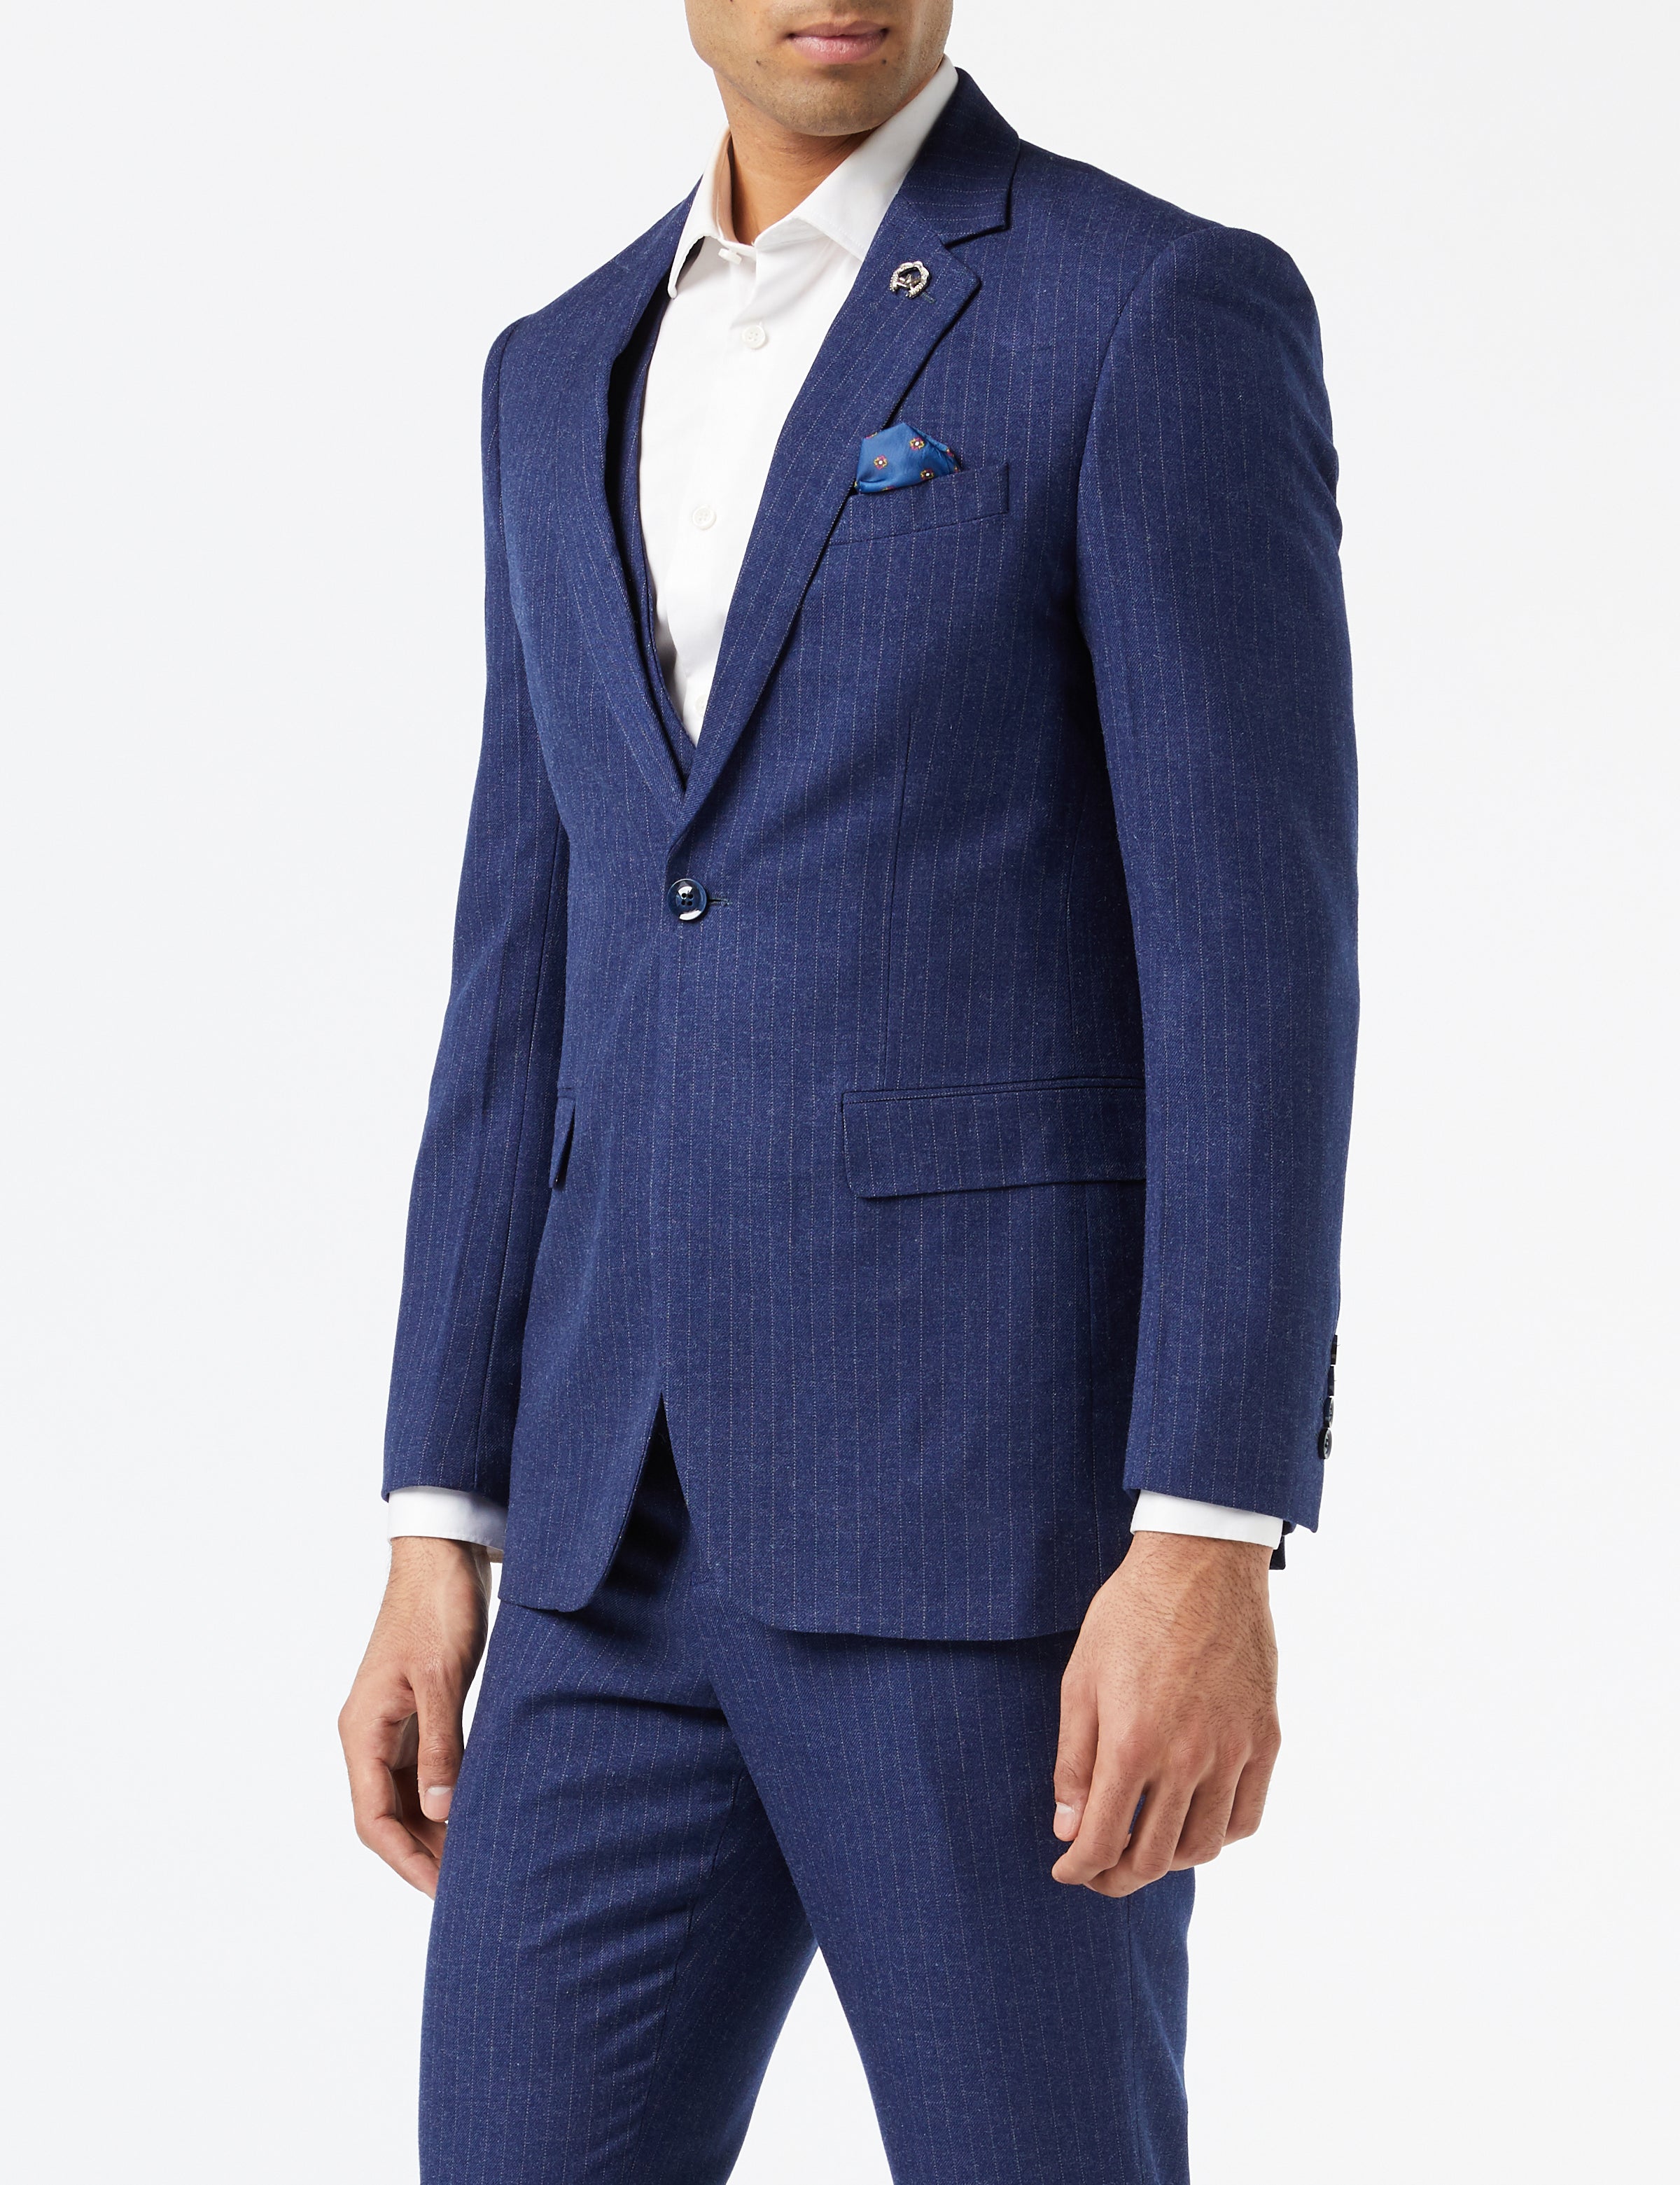 Mens 3 Piece Suit Blue Pinstripe 1929 S Gatsby Tailored Jacket Waistcoat Trouser